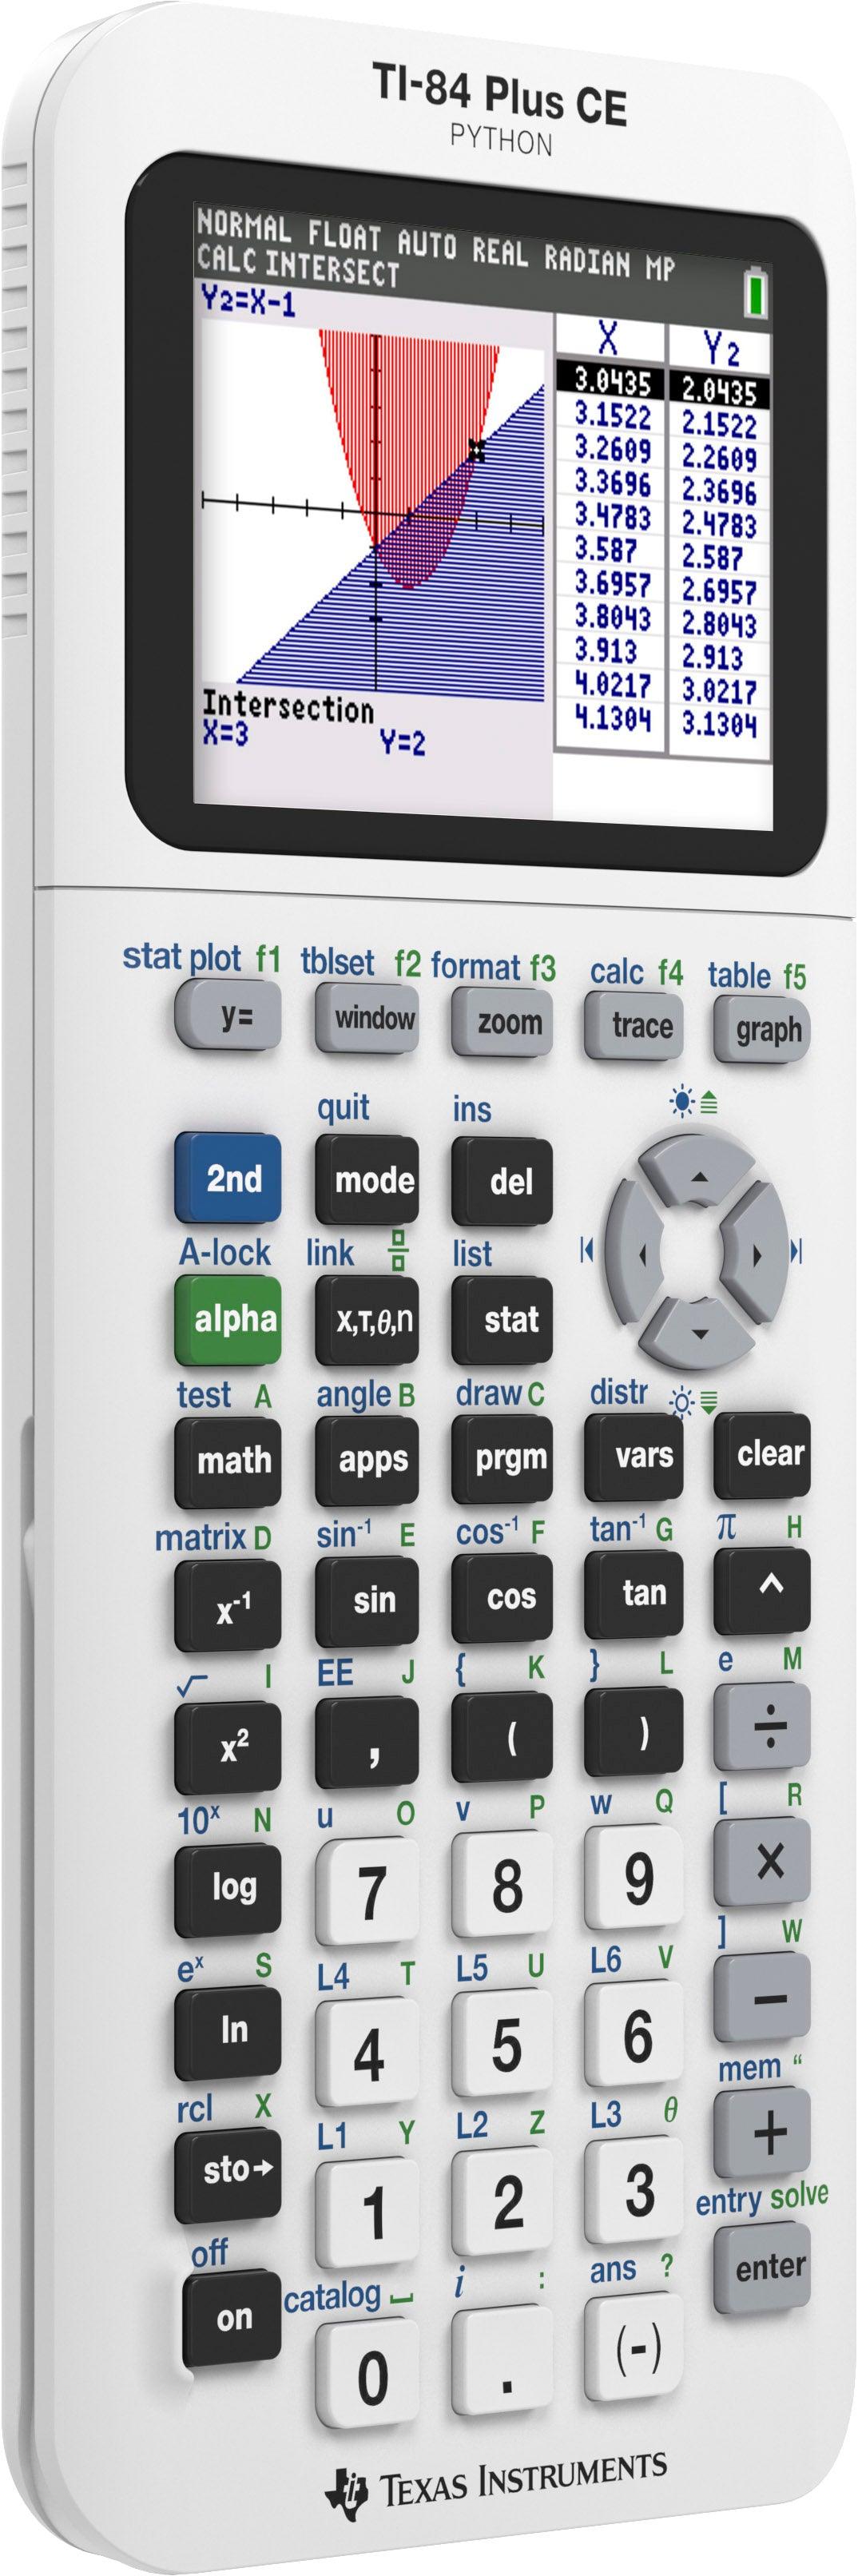 Ti-84 Plus CE Python Graphing Calculator - Bright White - Underwood Distributing Co.